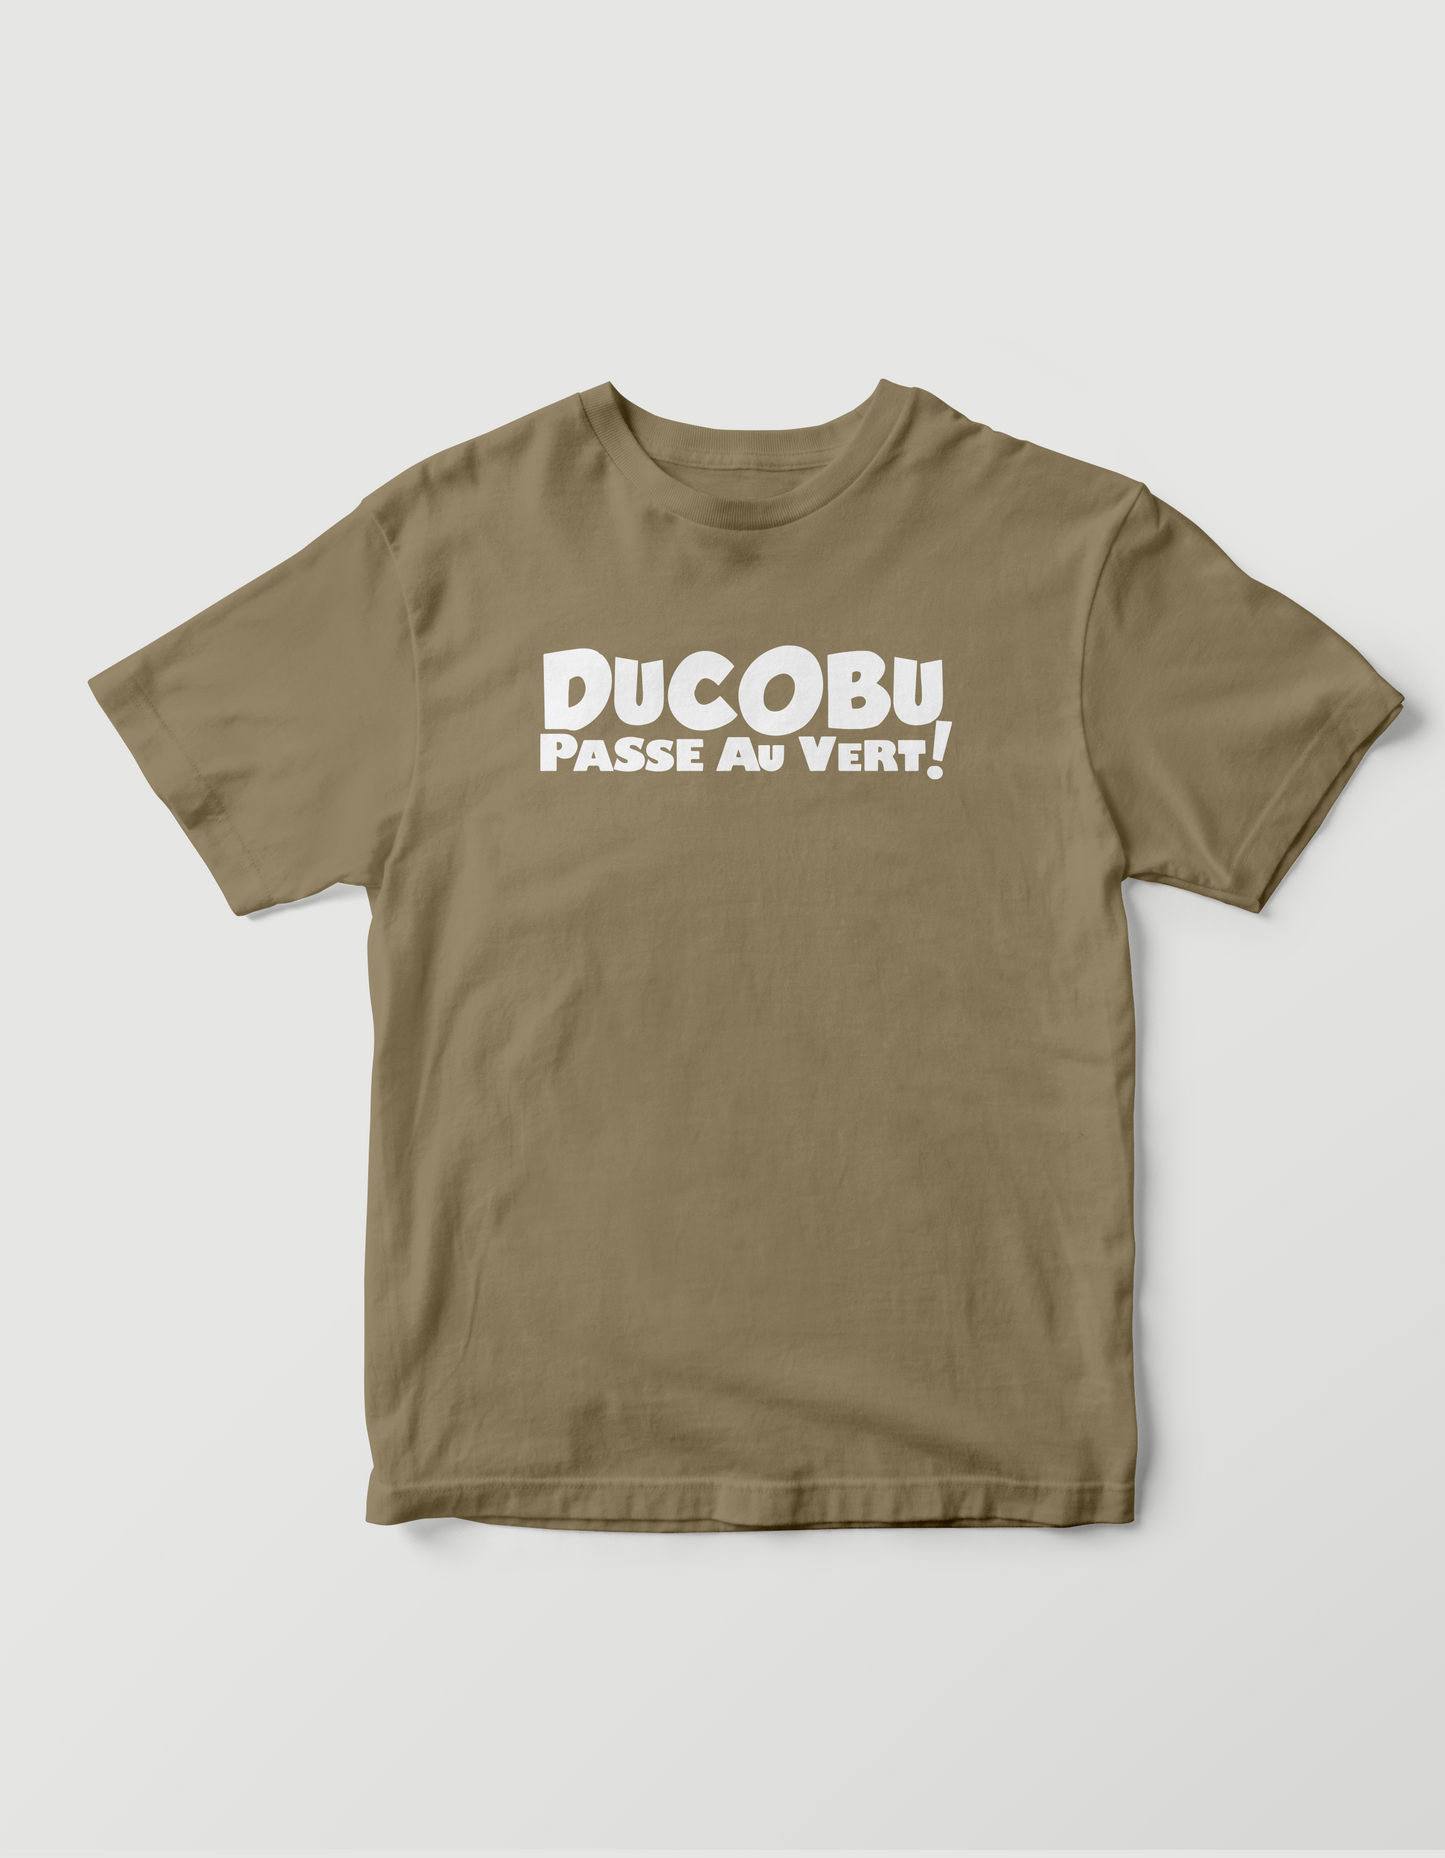 Tee-shirt adulte Ducobu passe au vert !